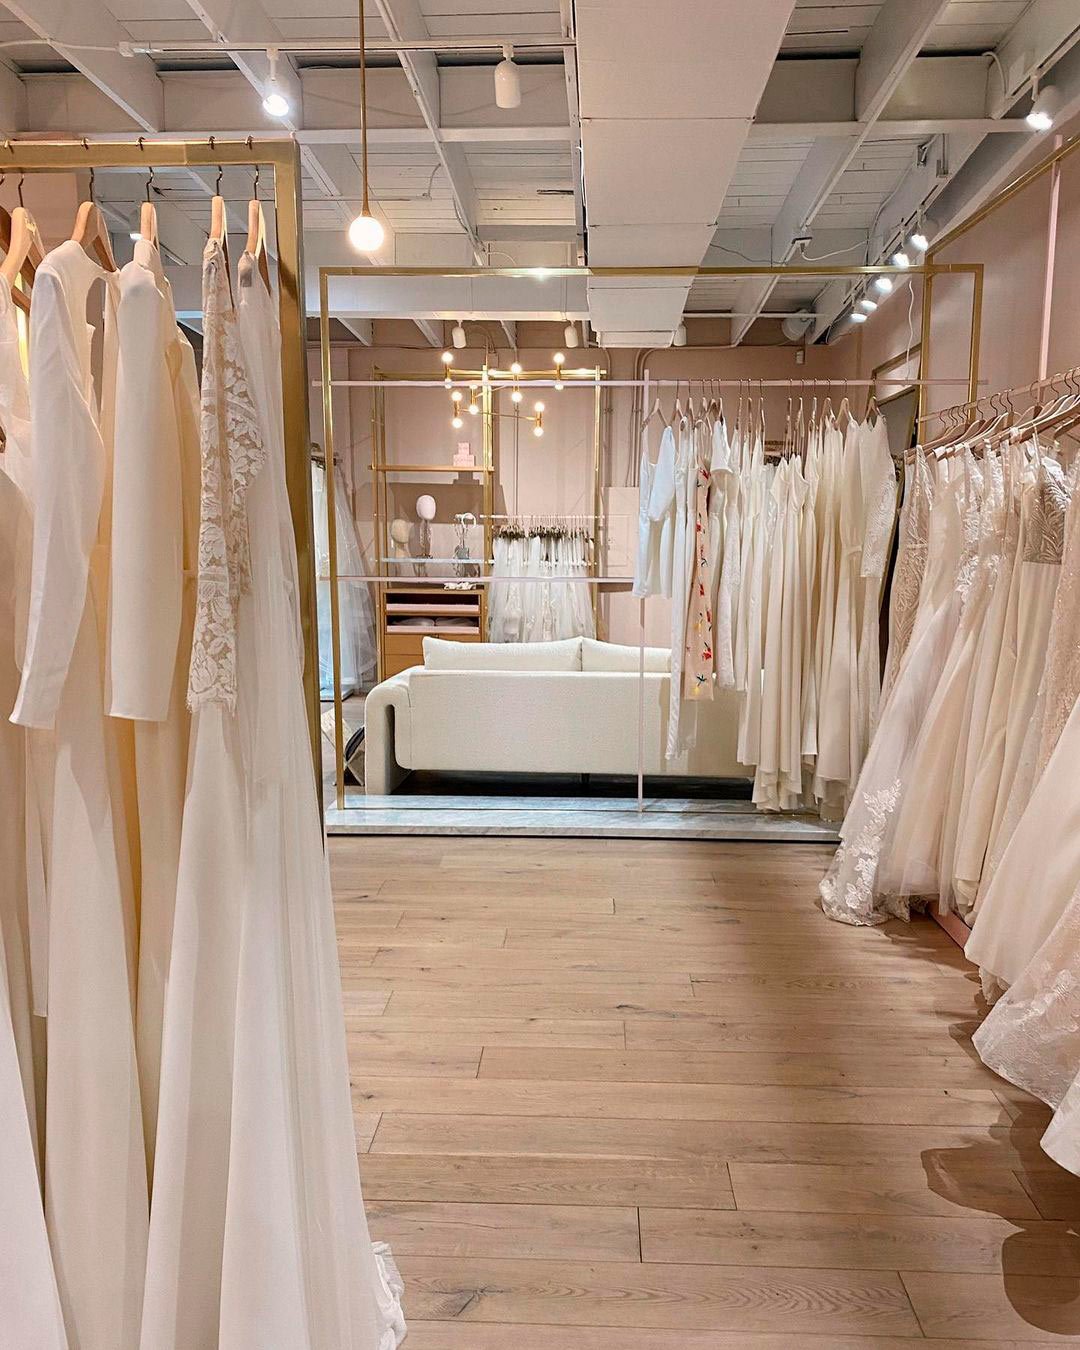 best bridal salons houston bride dress ideas